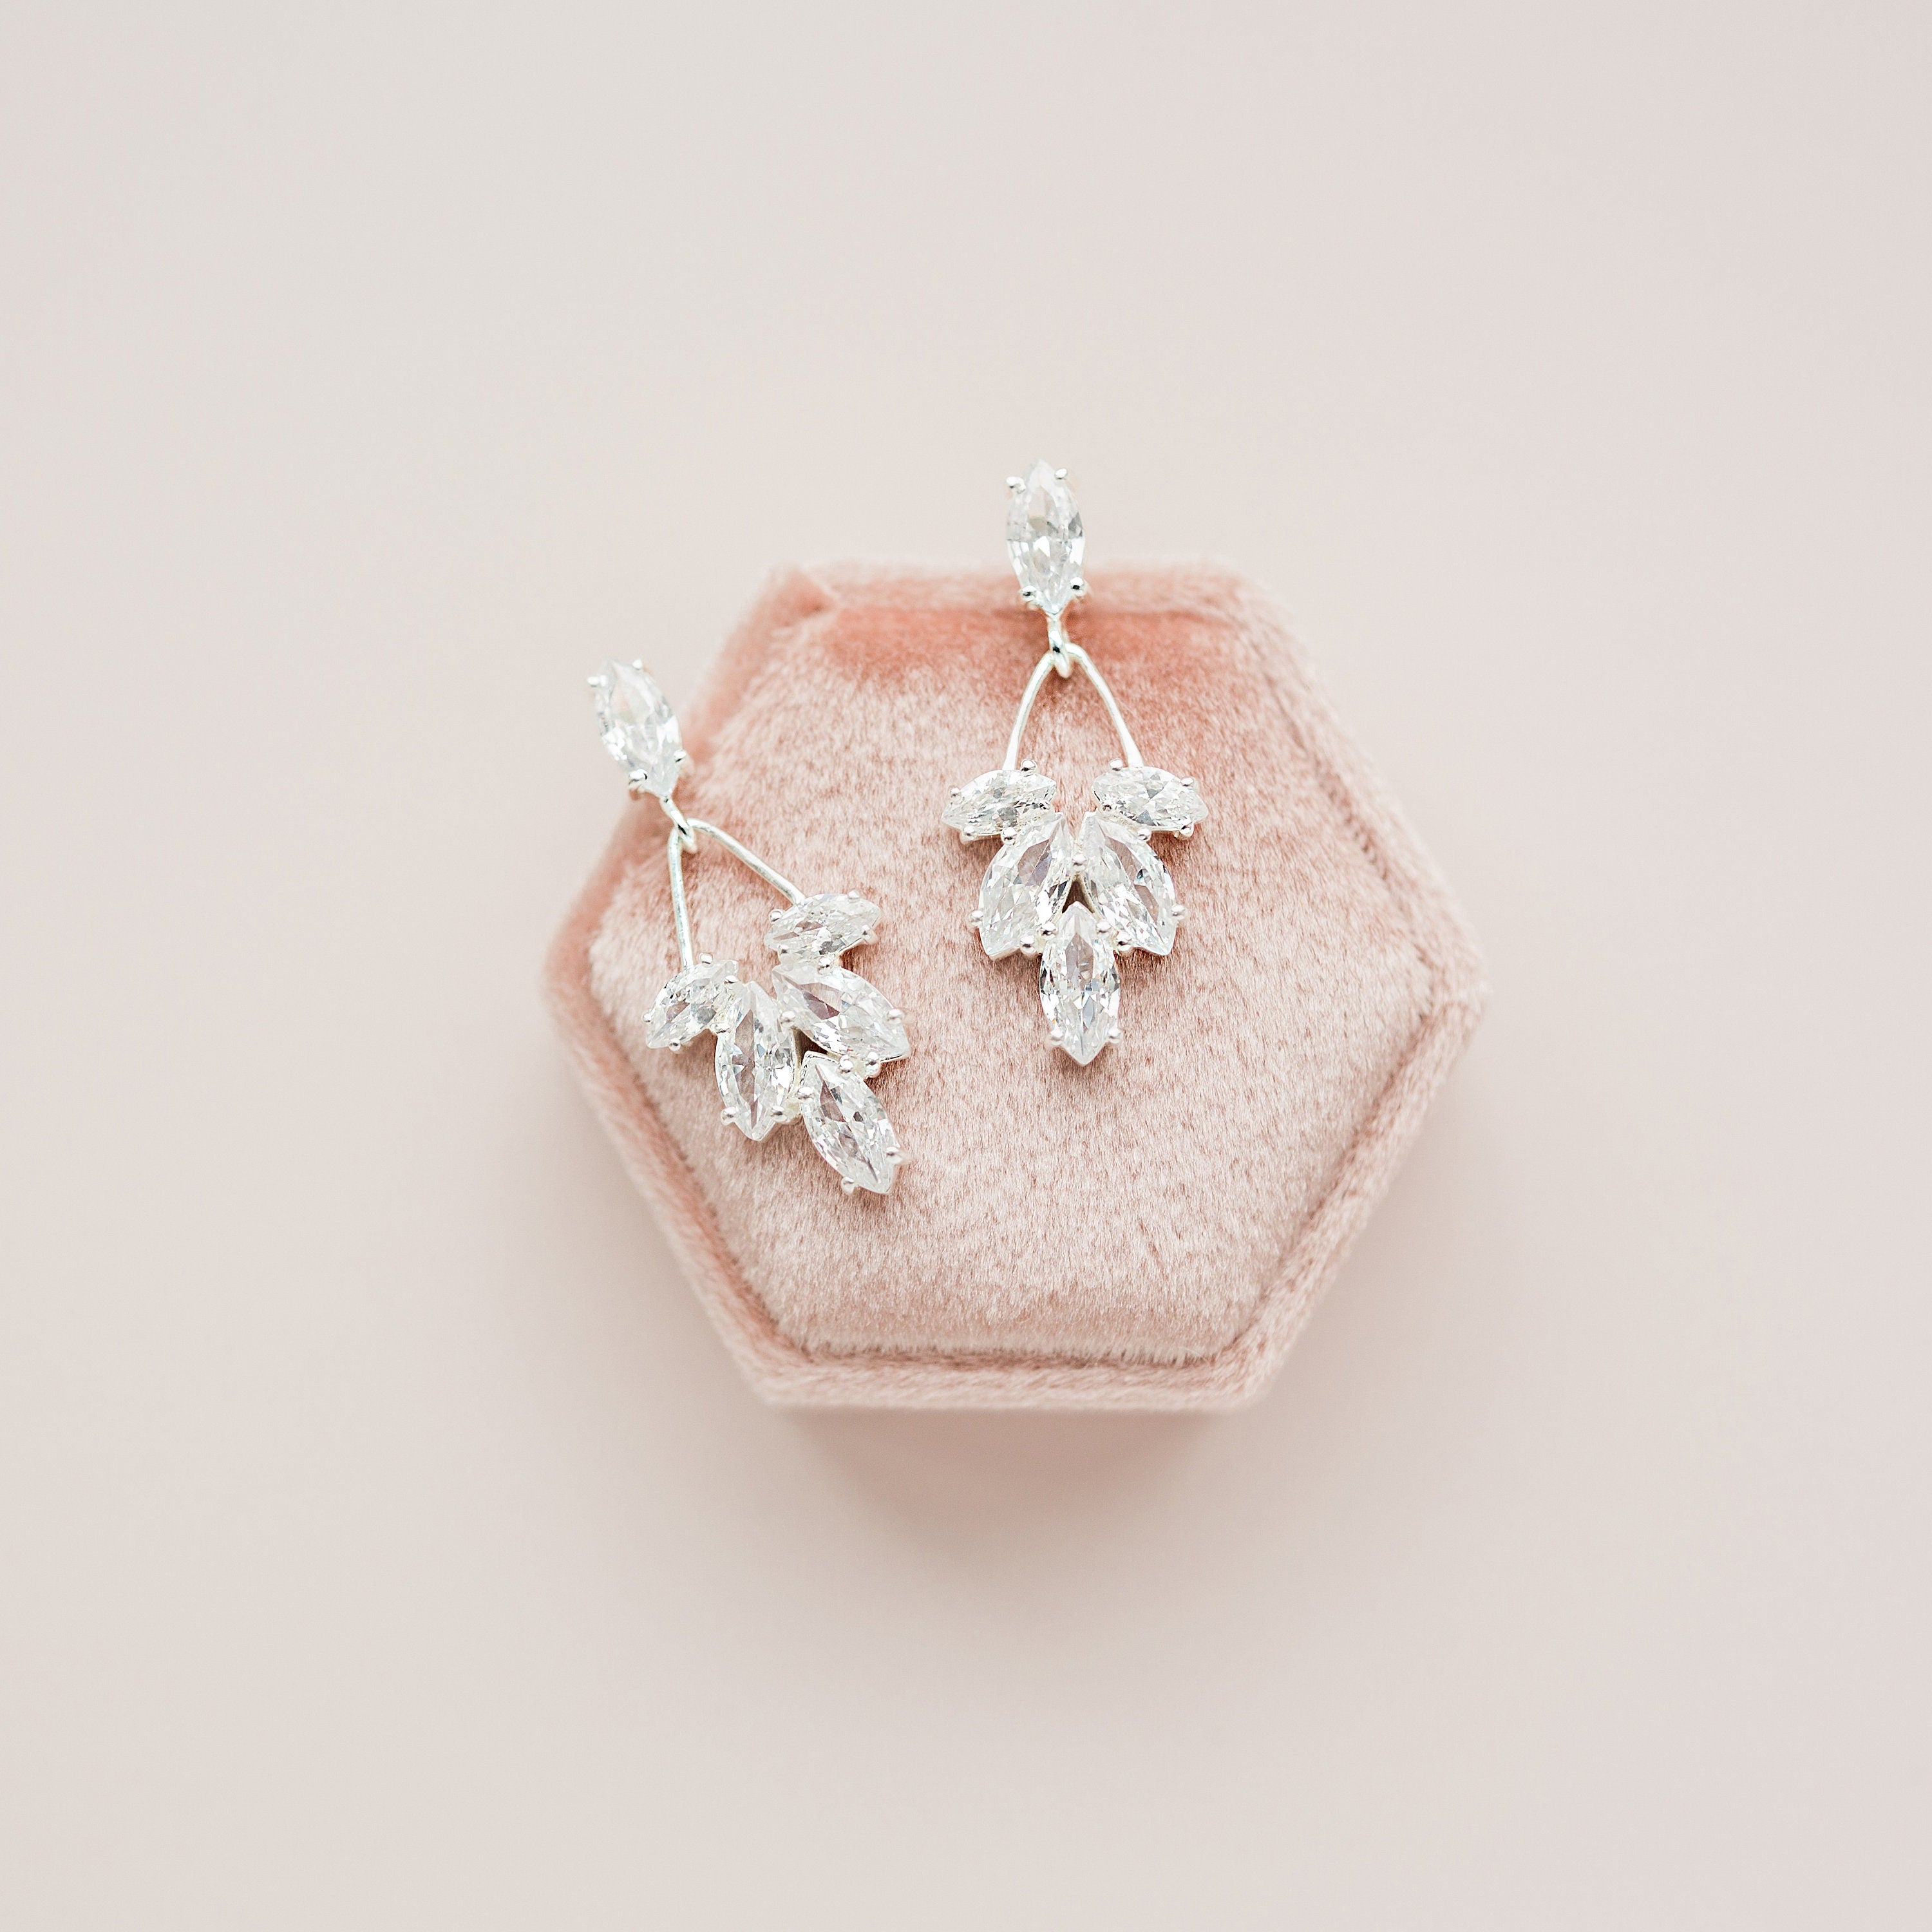 ANNA // Silver Bridal Earrings